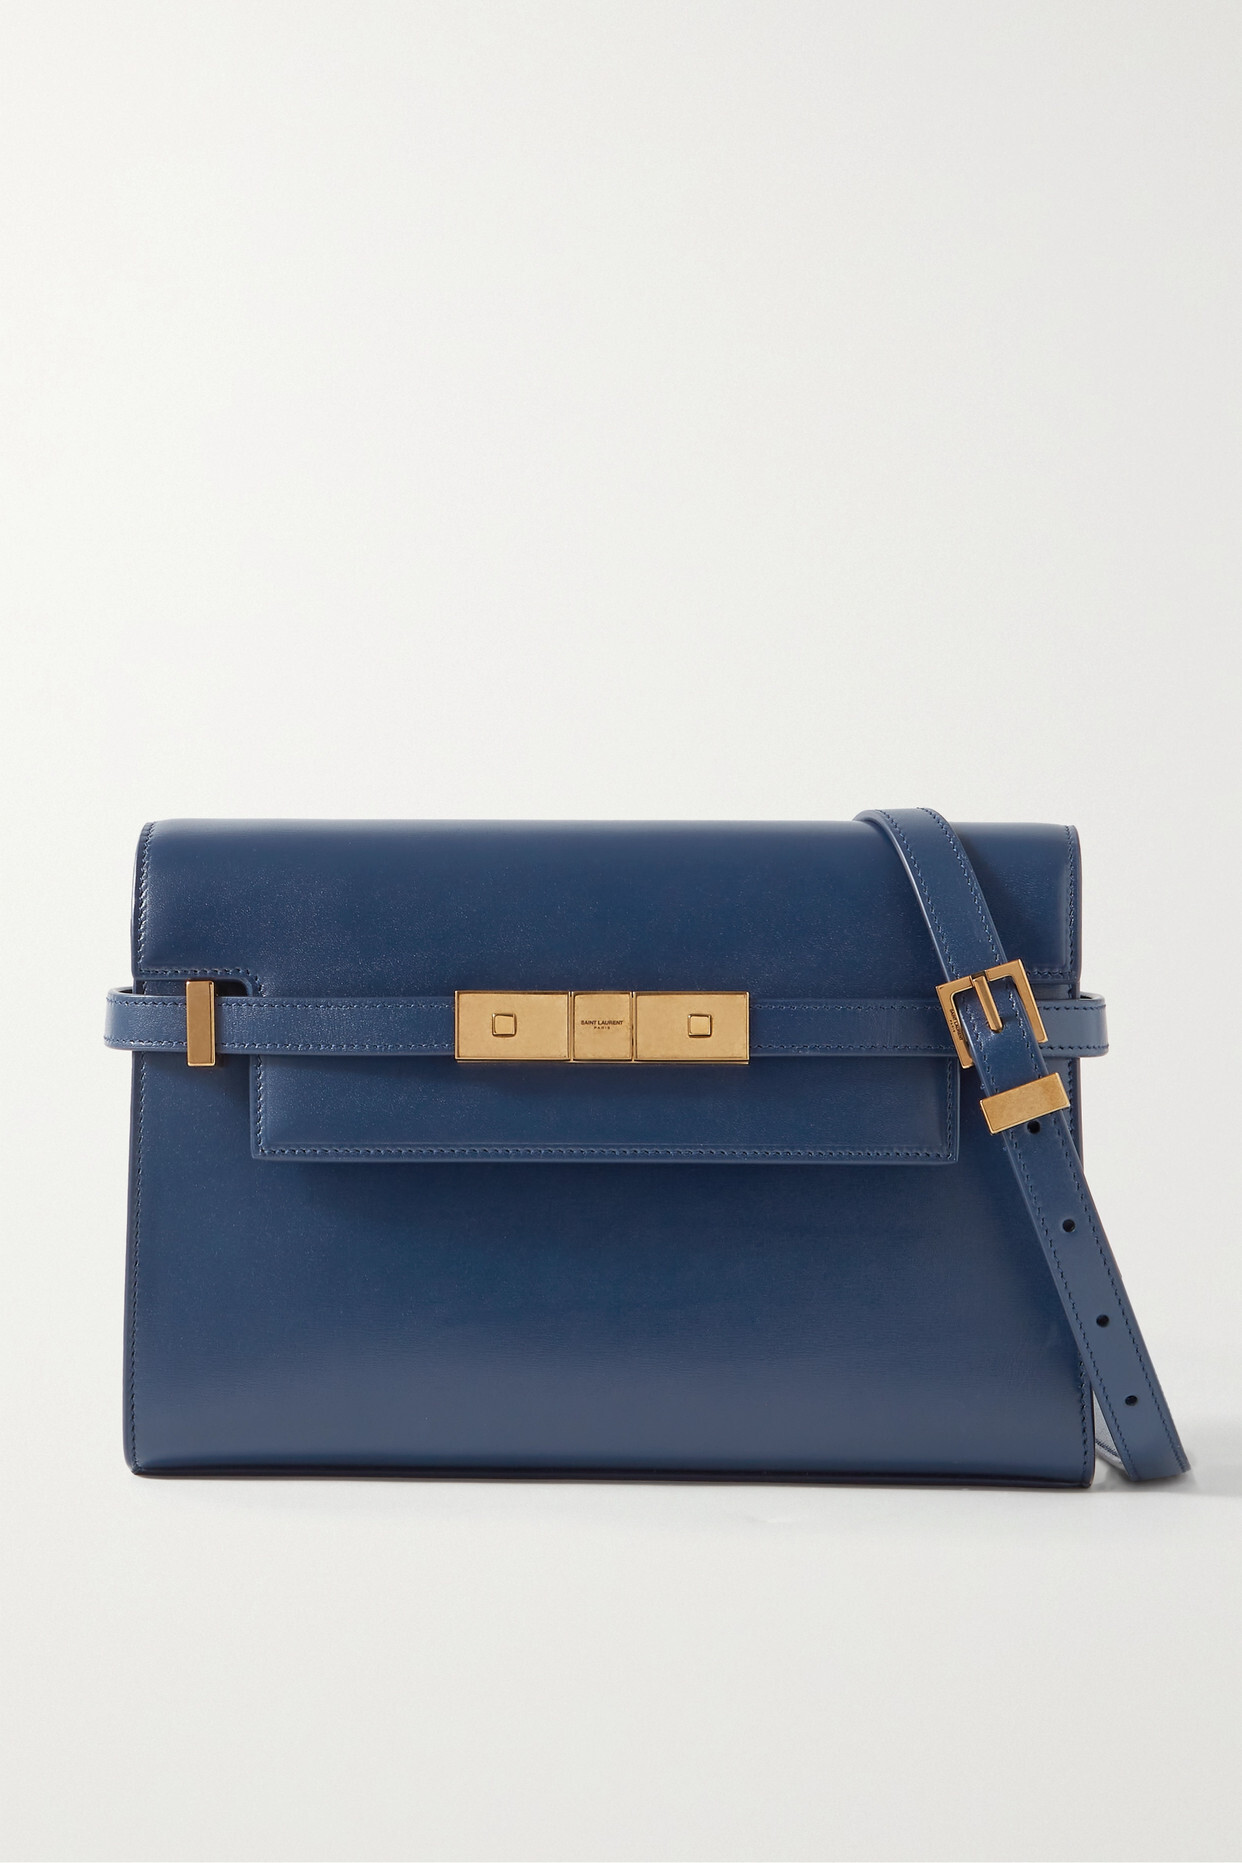 SAINT LAURENT - Manhattan Small Leather Shoulder Bag - Blue